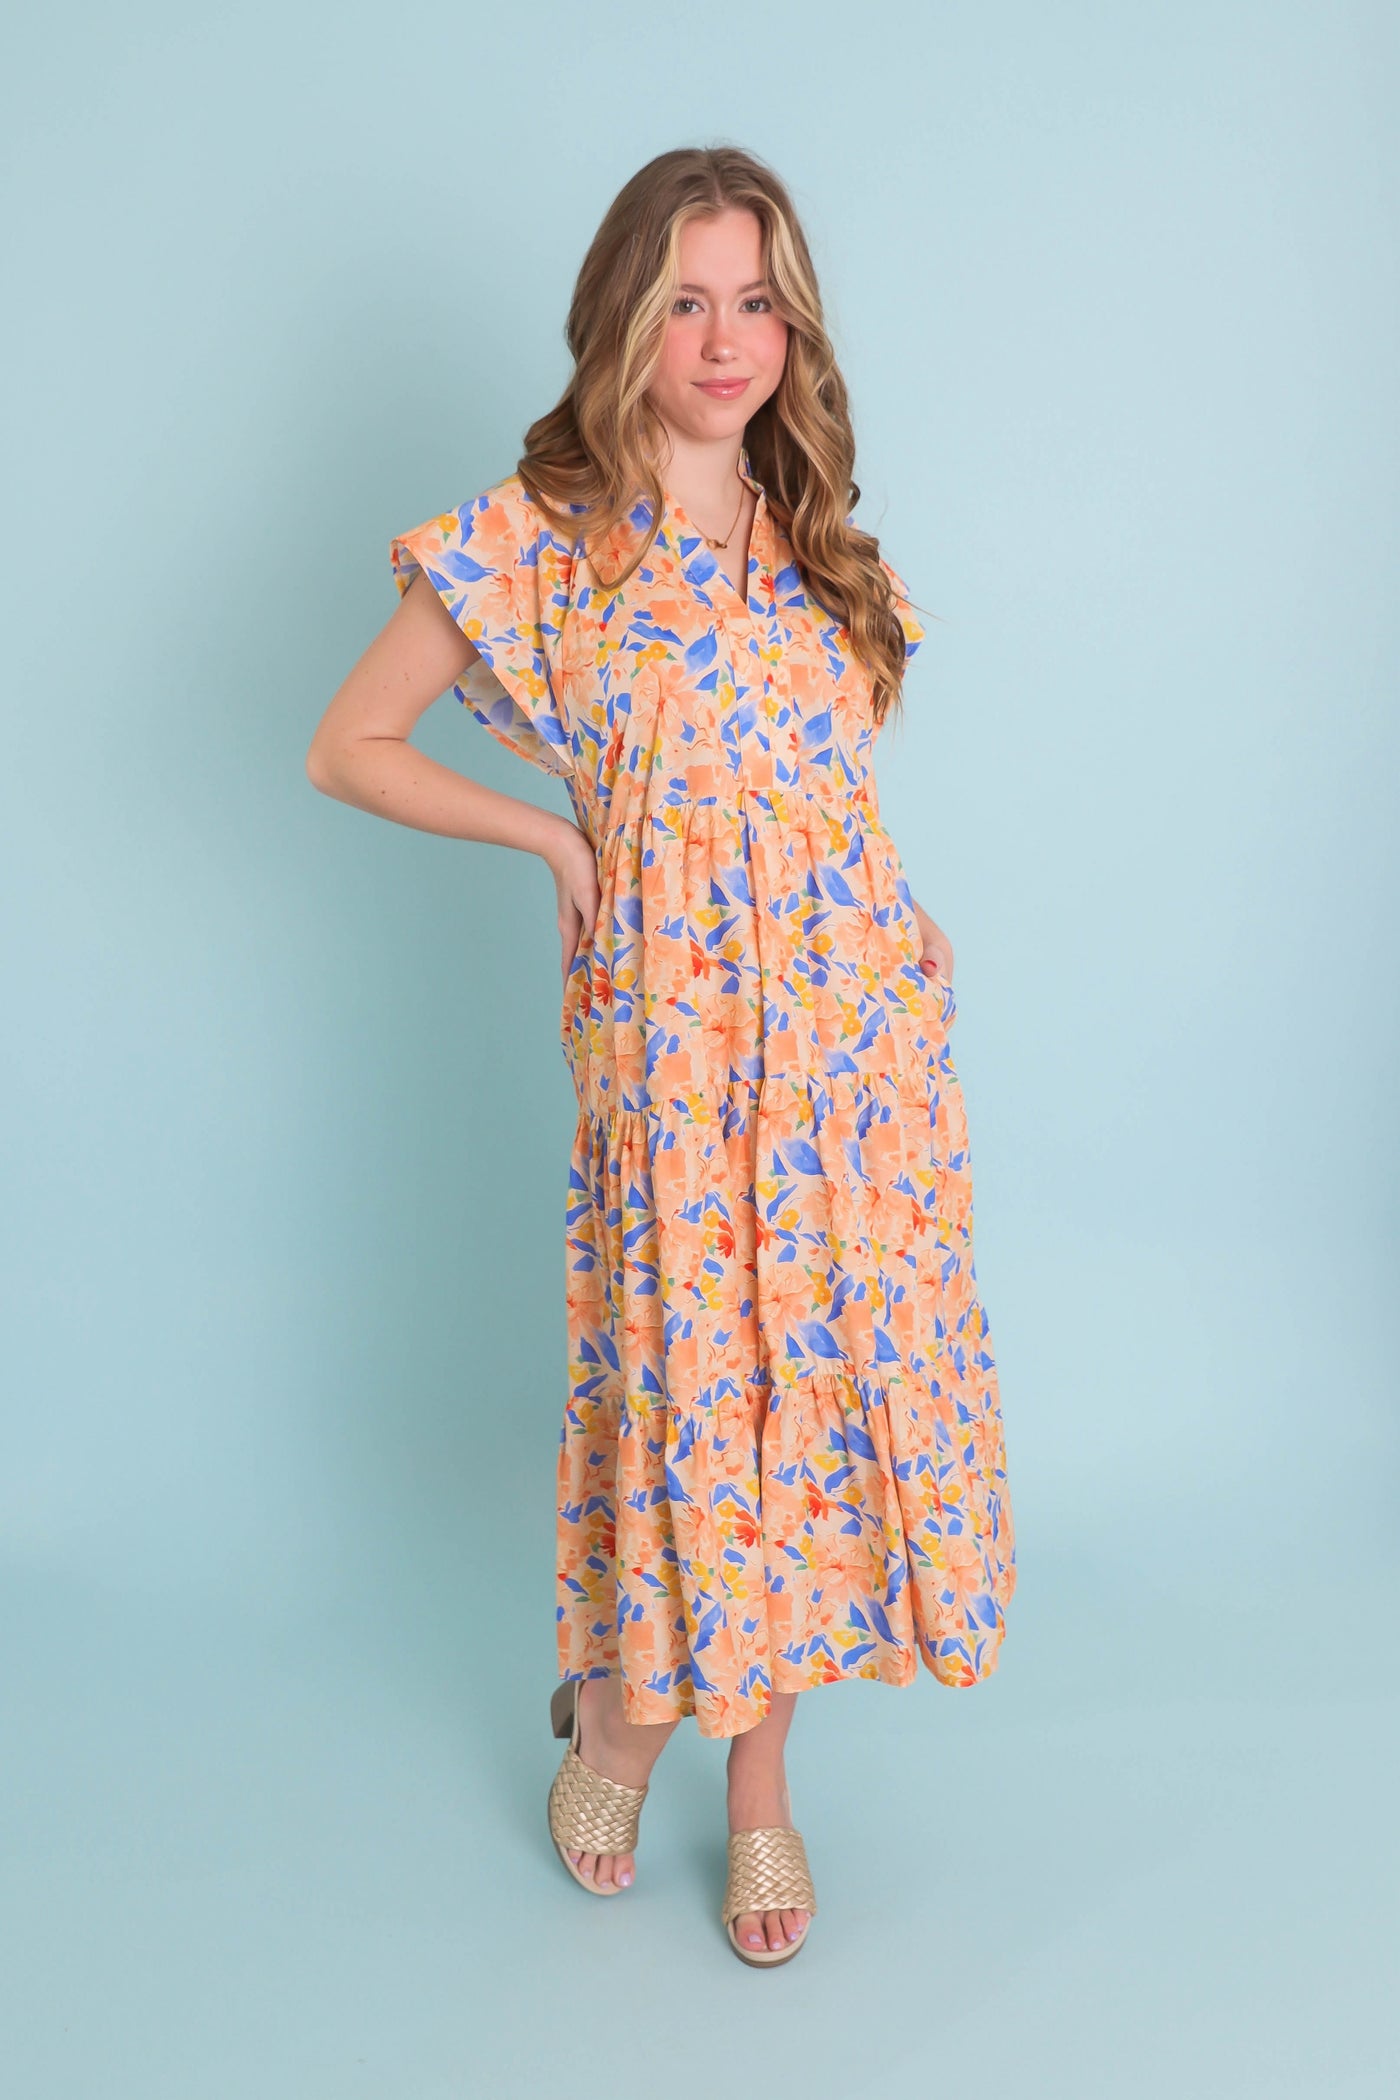 Women's Beautiful Spring Dresses- Women's Floral Print Midi Dress